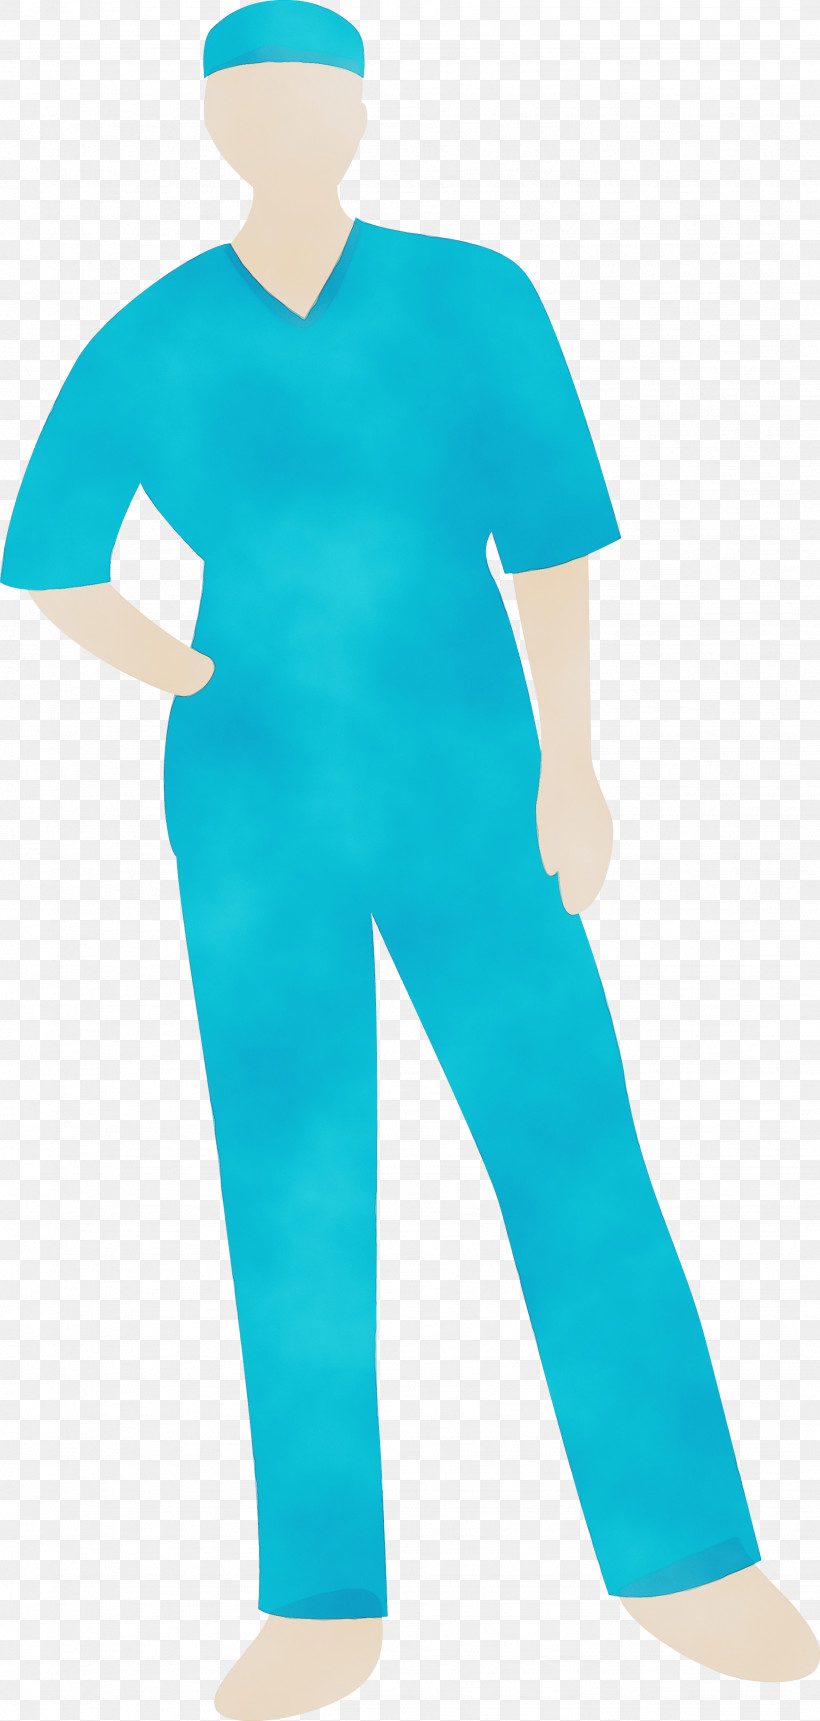 Sleeve Medical Glove Uniform Glove Turquoise, PNG, 1847x3877px, Medical Elements, Glove, Medical Glove, Paint, Sleeve Download Free